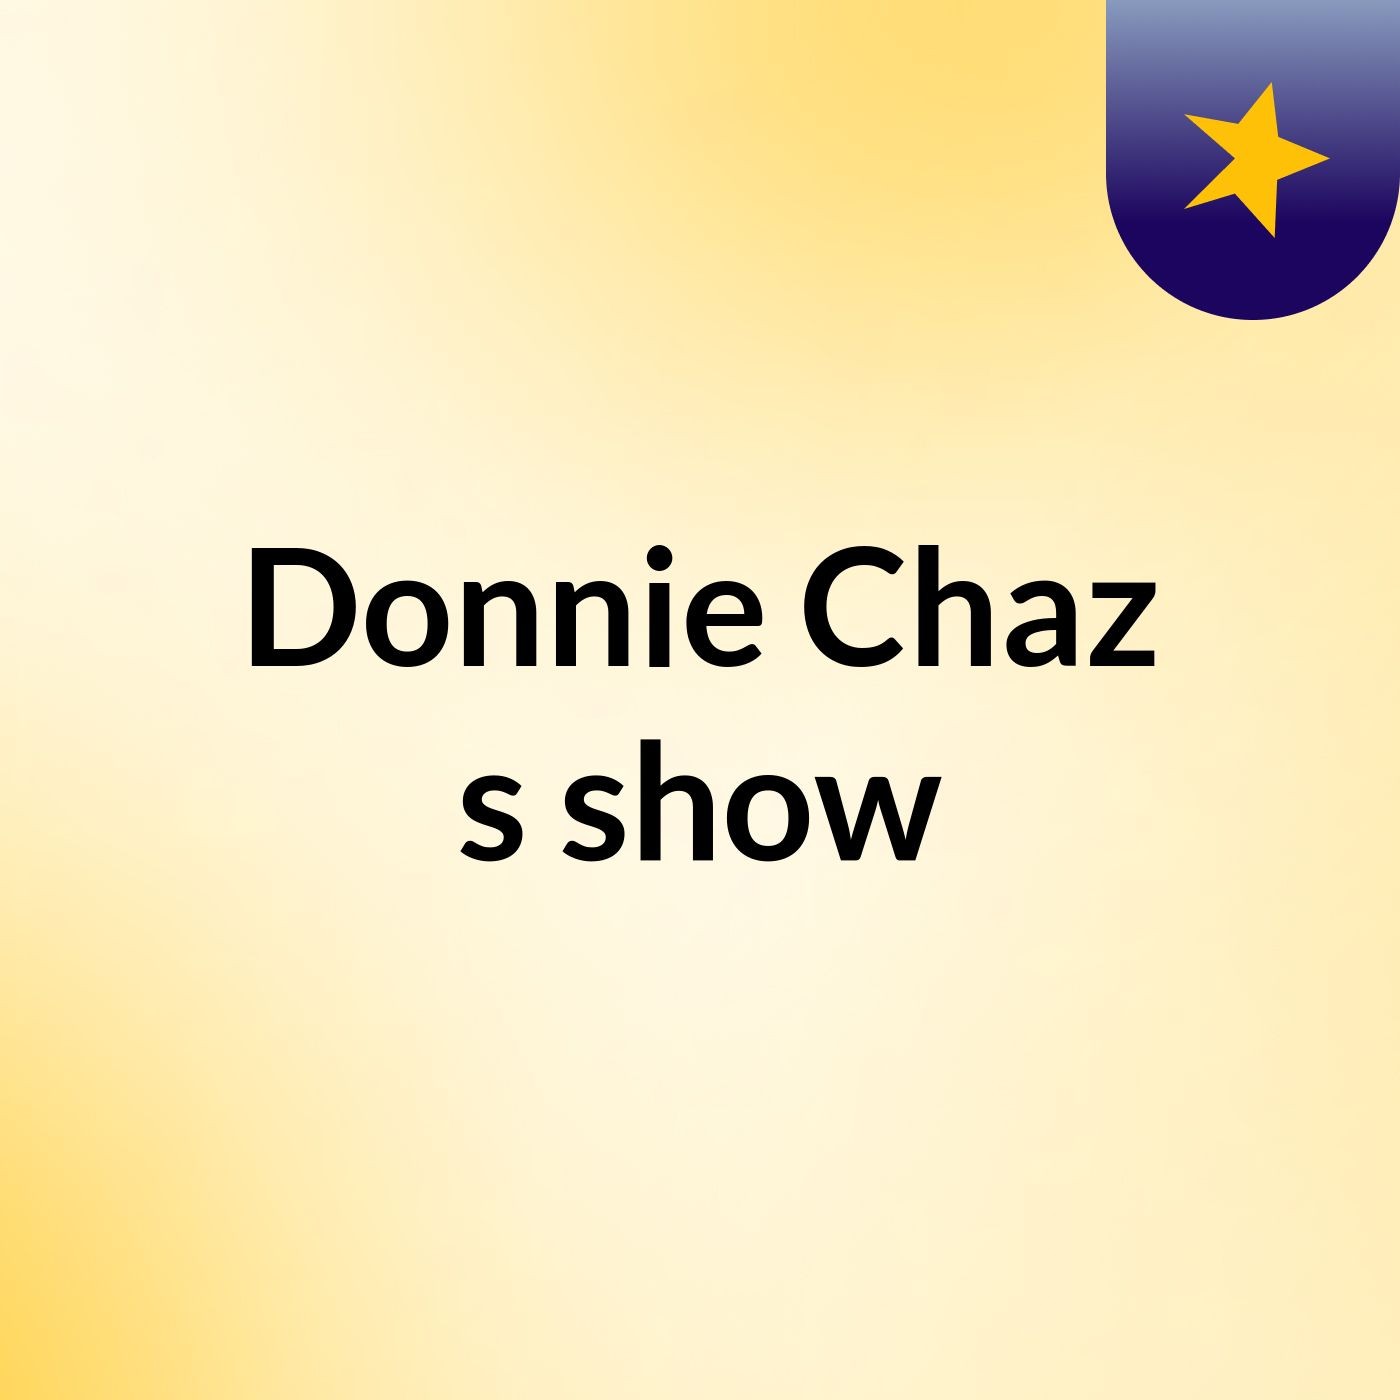 Episode 2 - Donnie Chaz's show